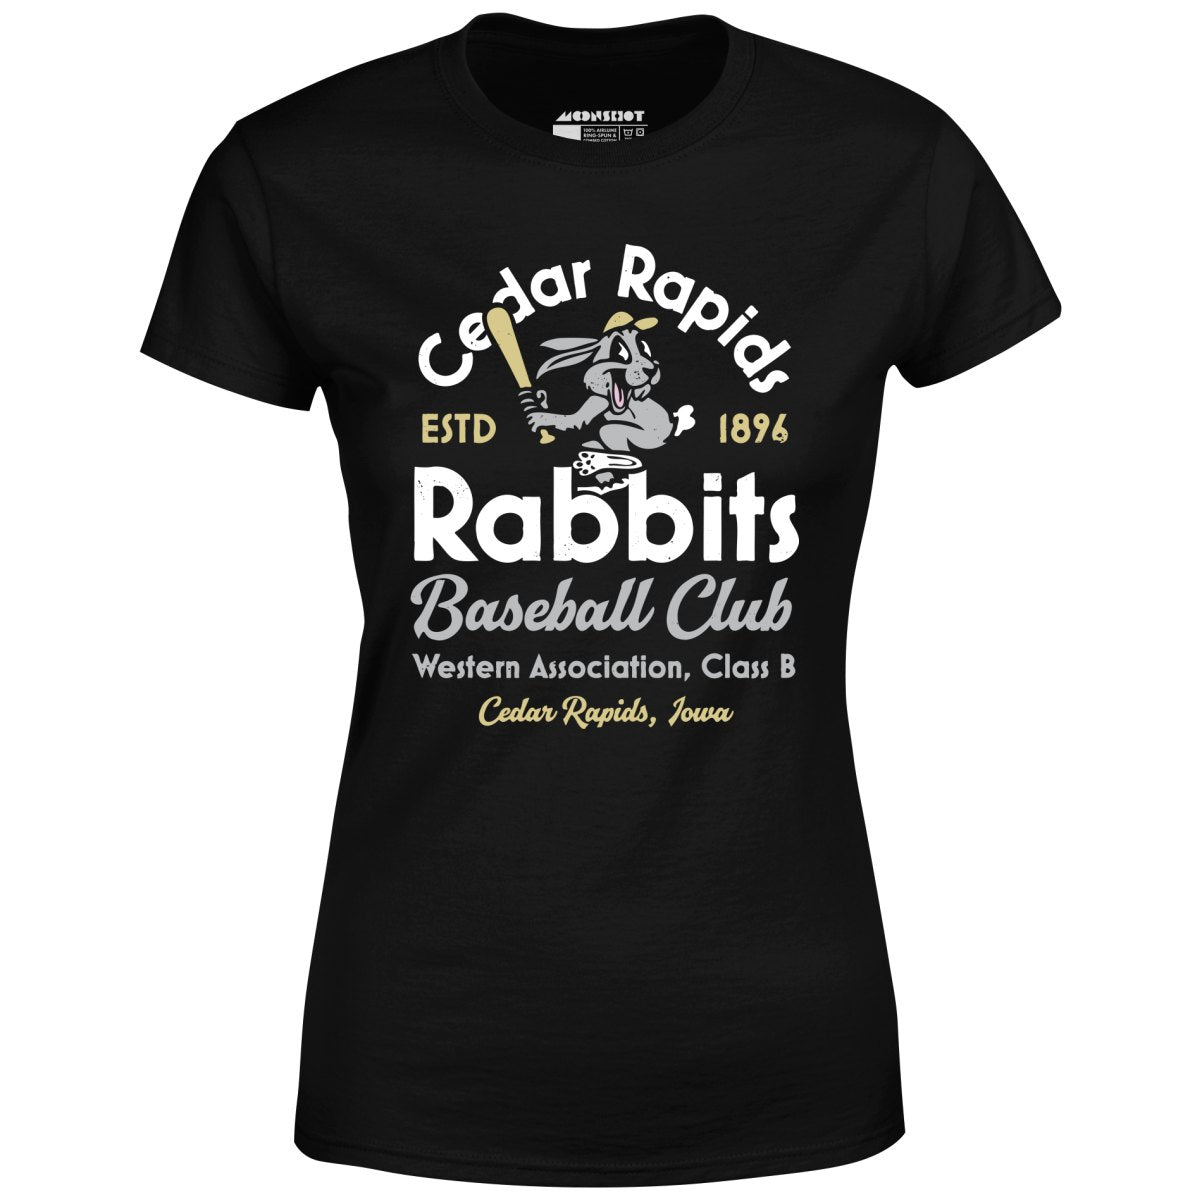 Cedar Rapids Rabbits - Iowa - Vintage Defunct Baseball Teams - Women's T-Shirt